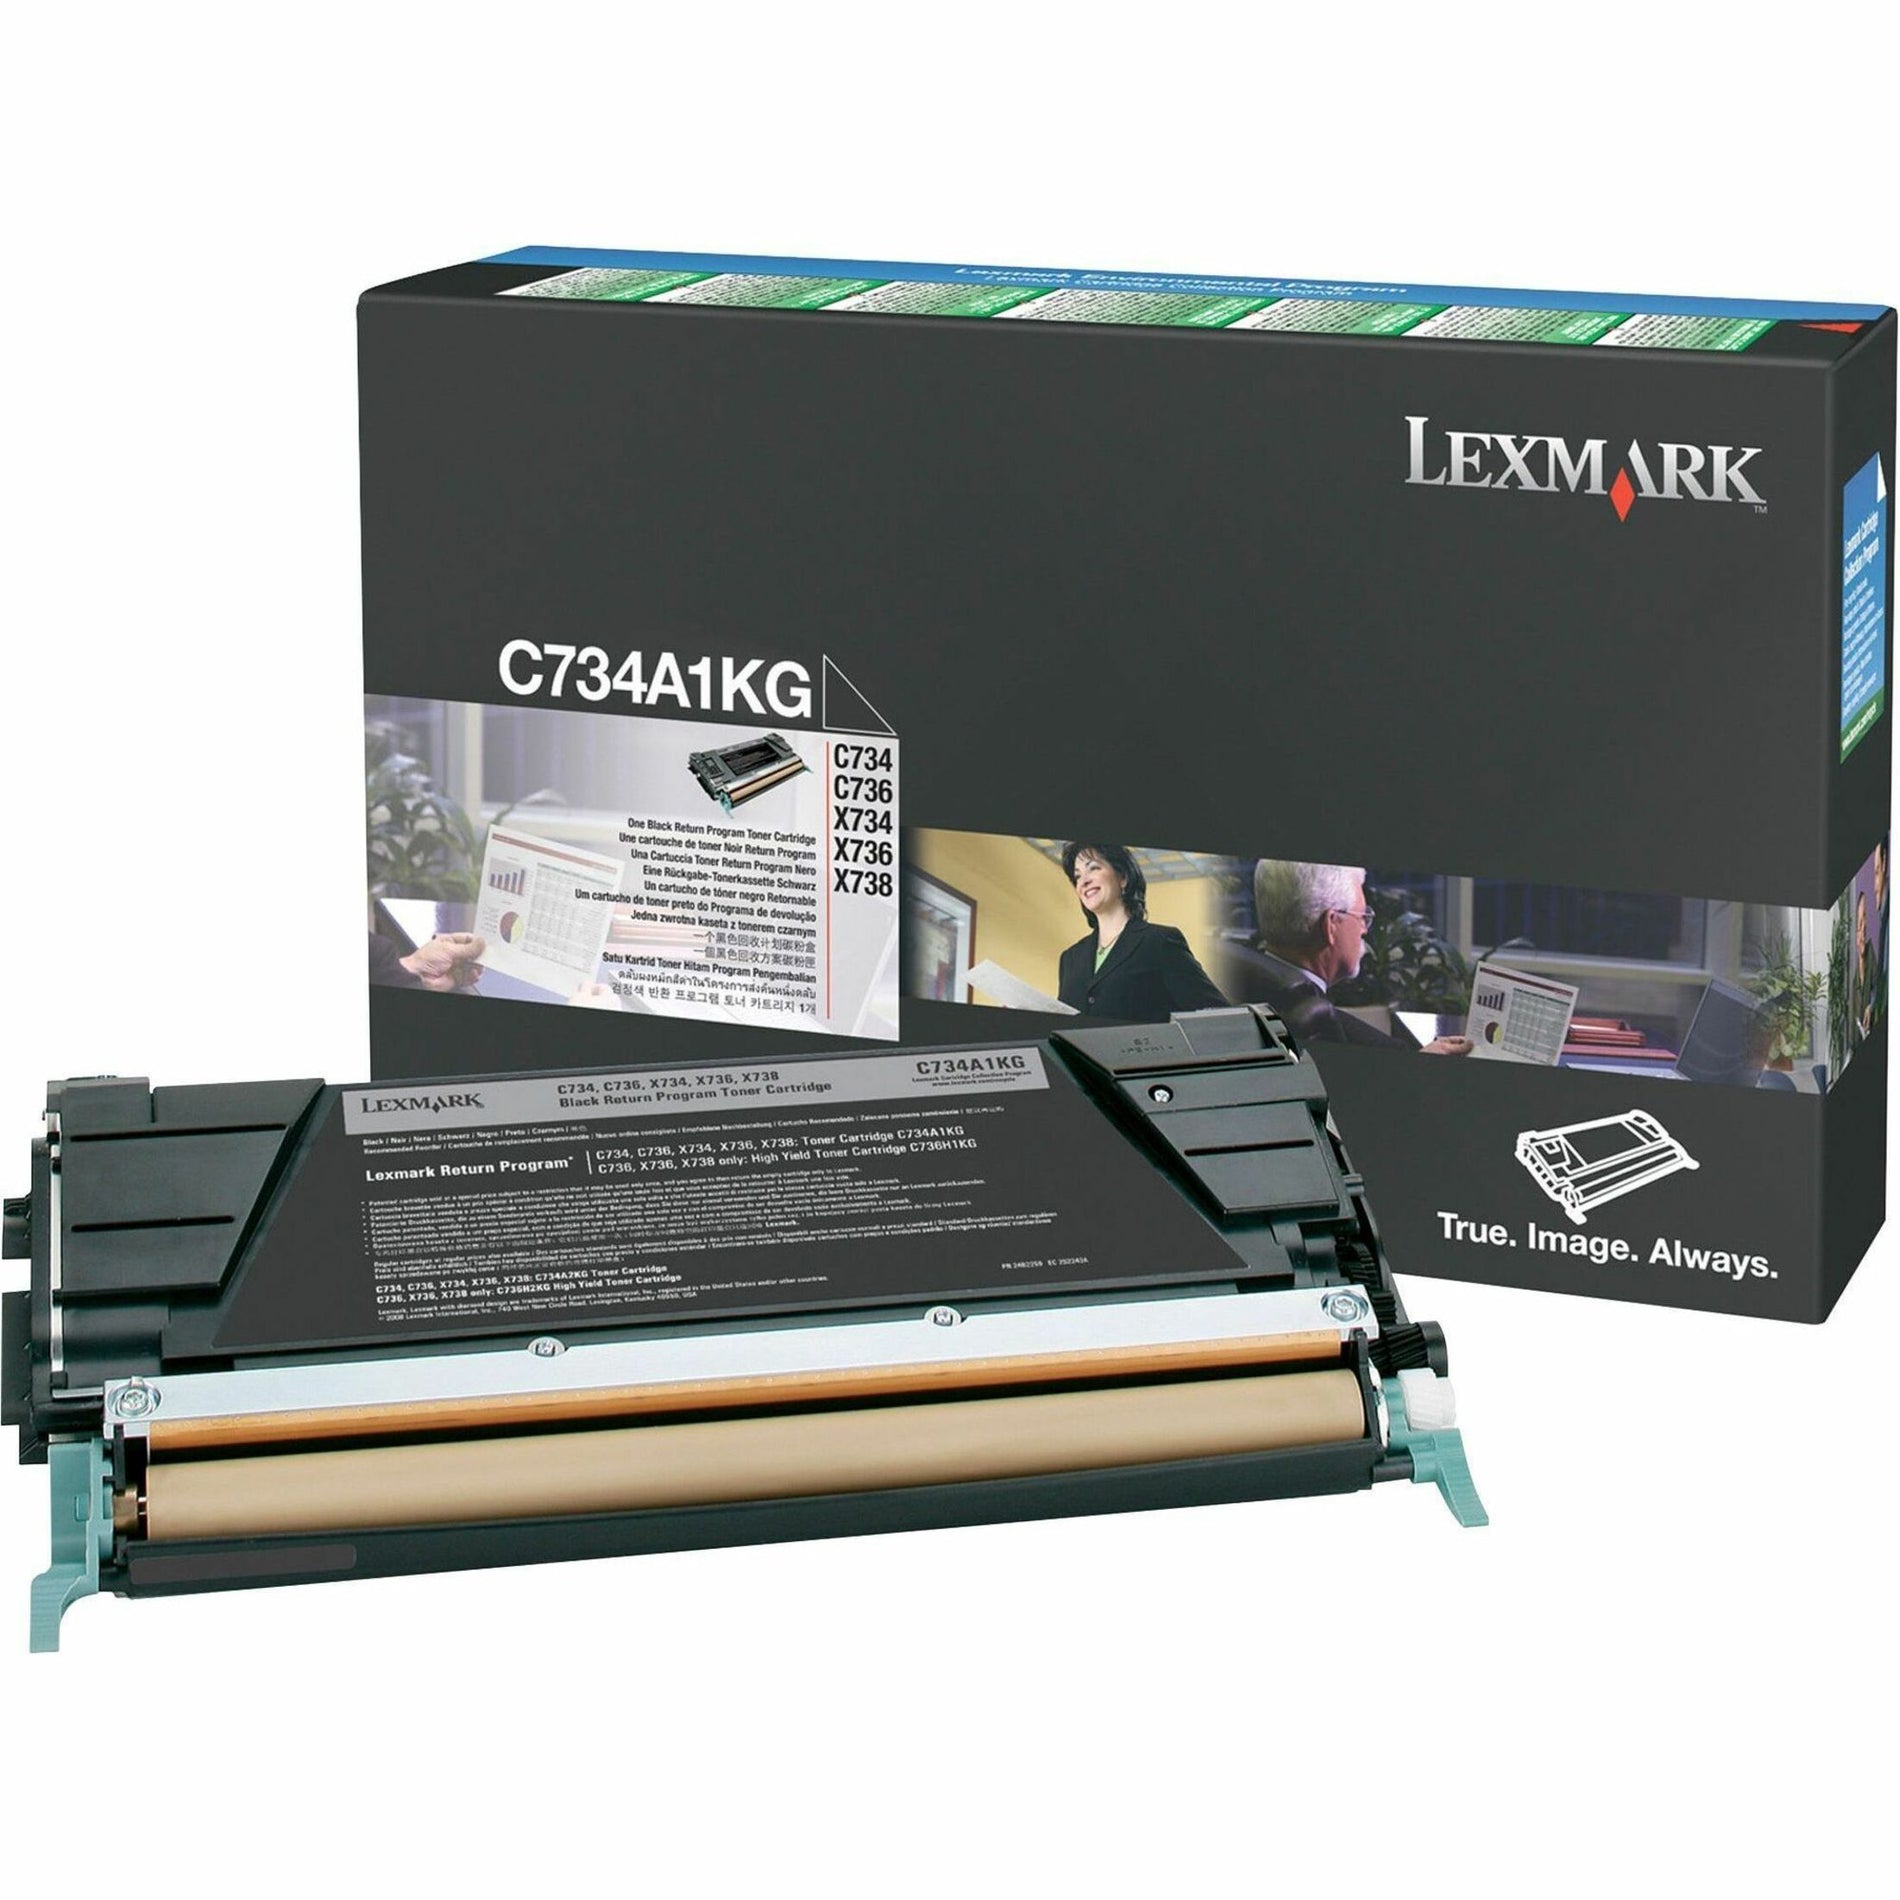 Lexmark C734A1KG Toner Cartridge, 8000 Page Yield, Black